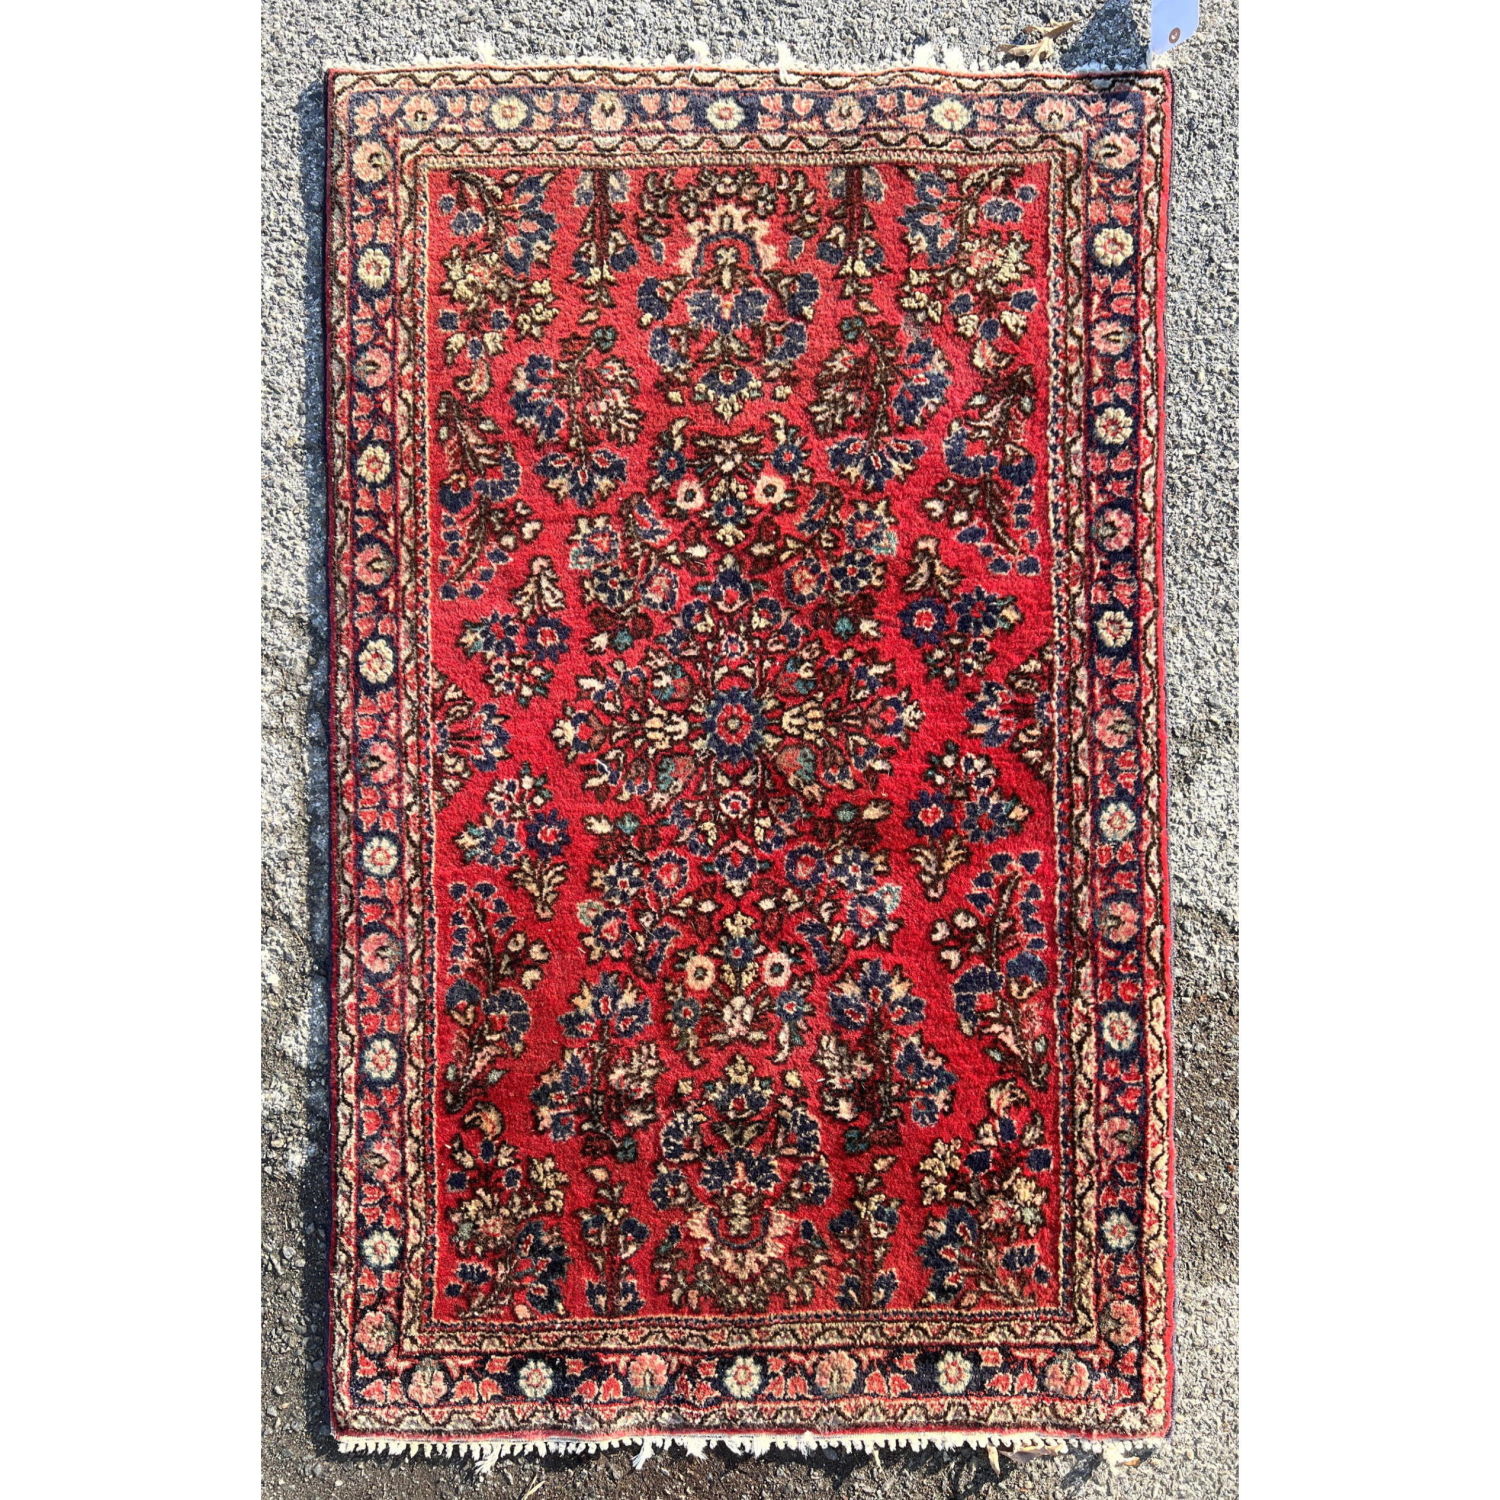 5 x 3 Handmade Oriental Carpet 2fed8c